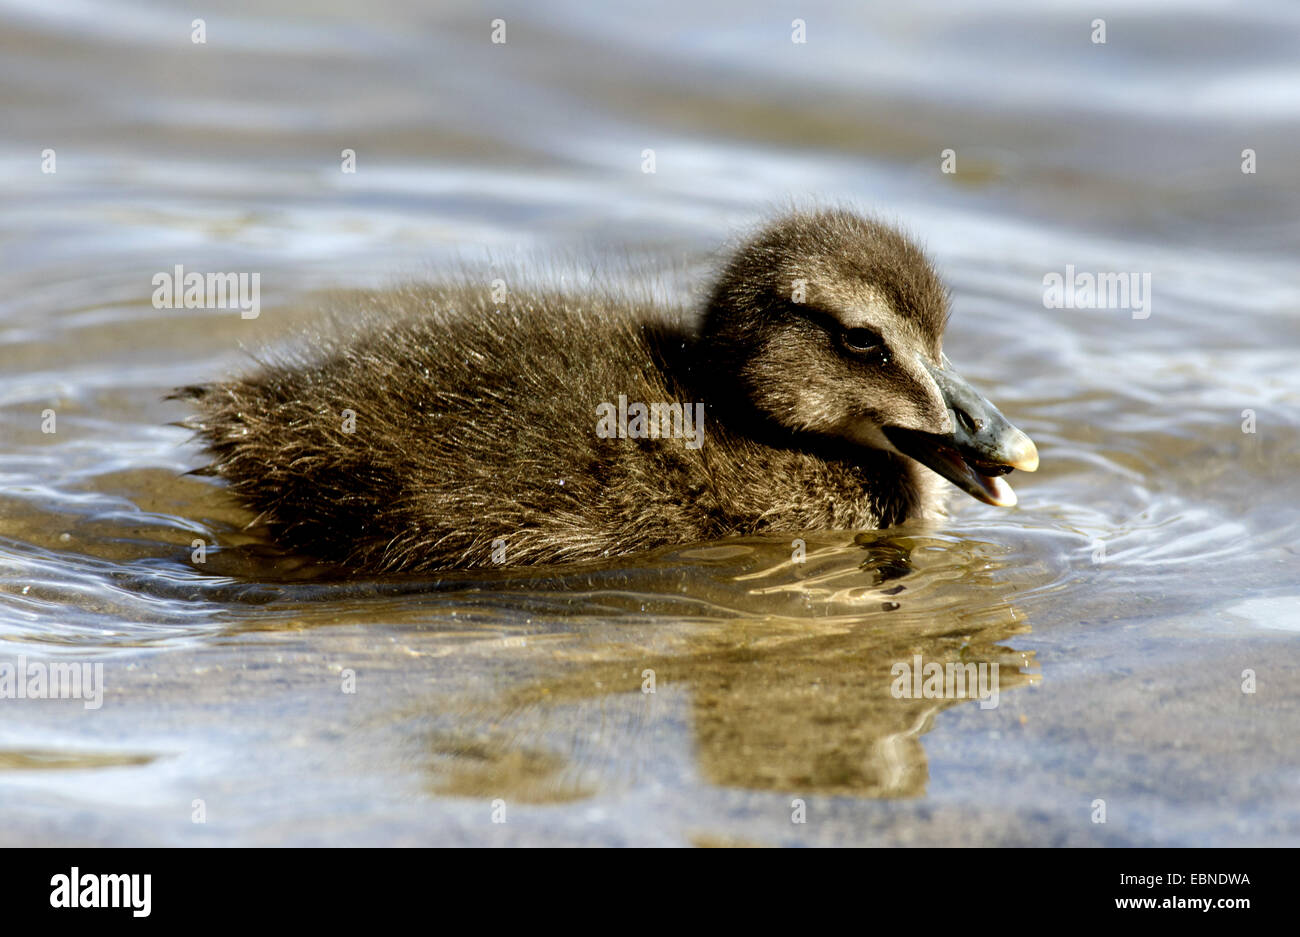 Common eider (Somateria mollissima), duckling swimming on water, United Kingdom, England, Northumberland Stock Photo